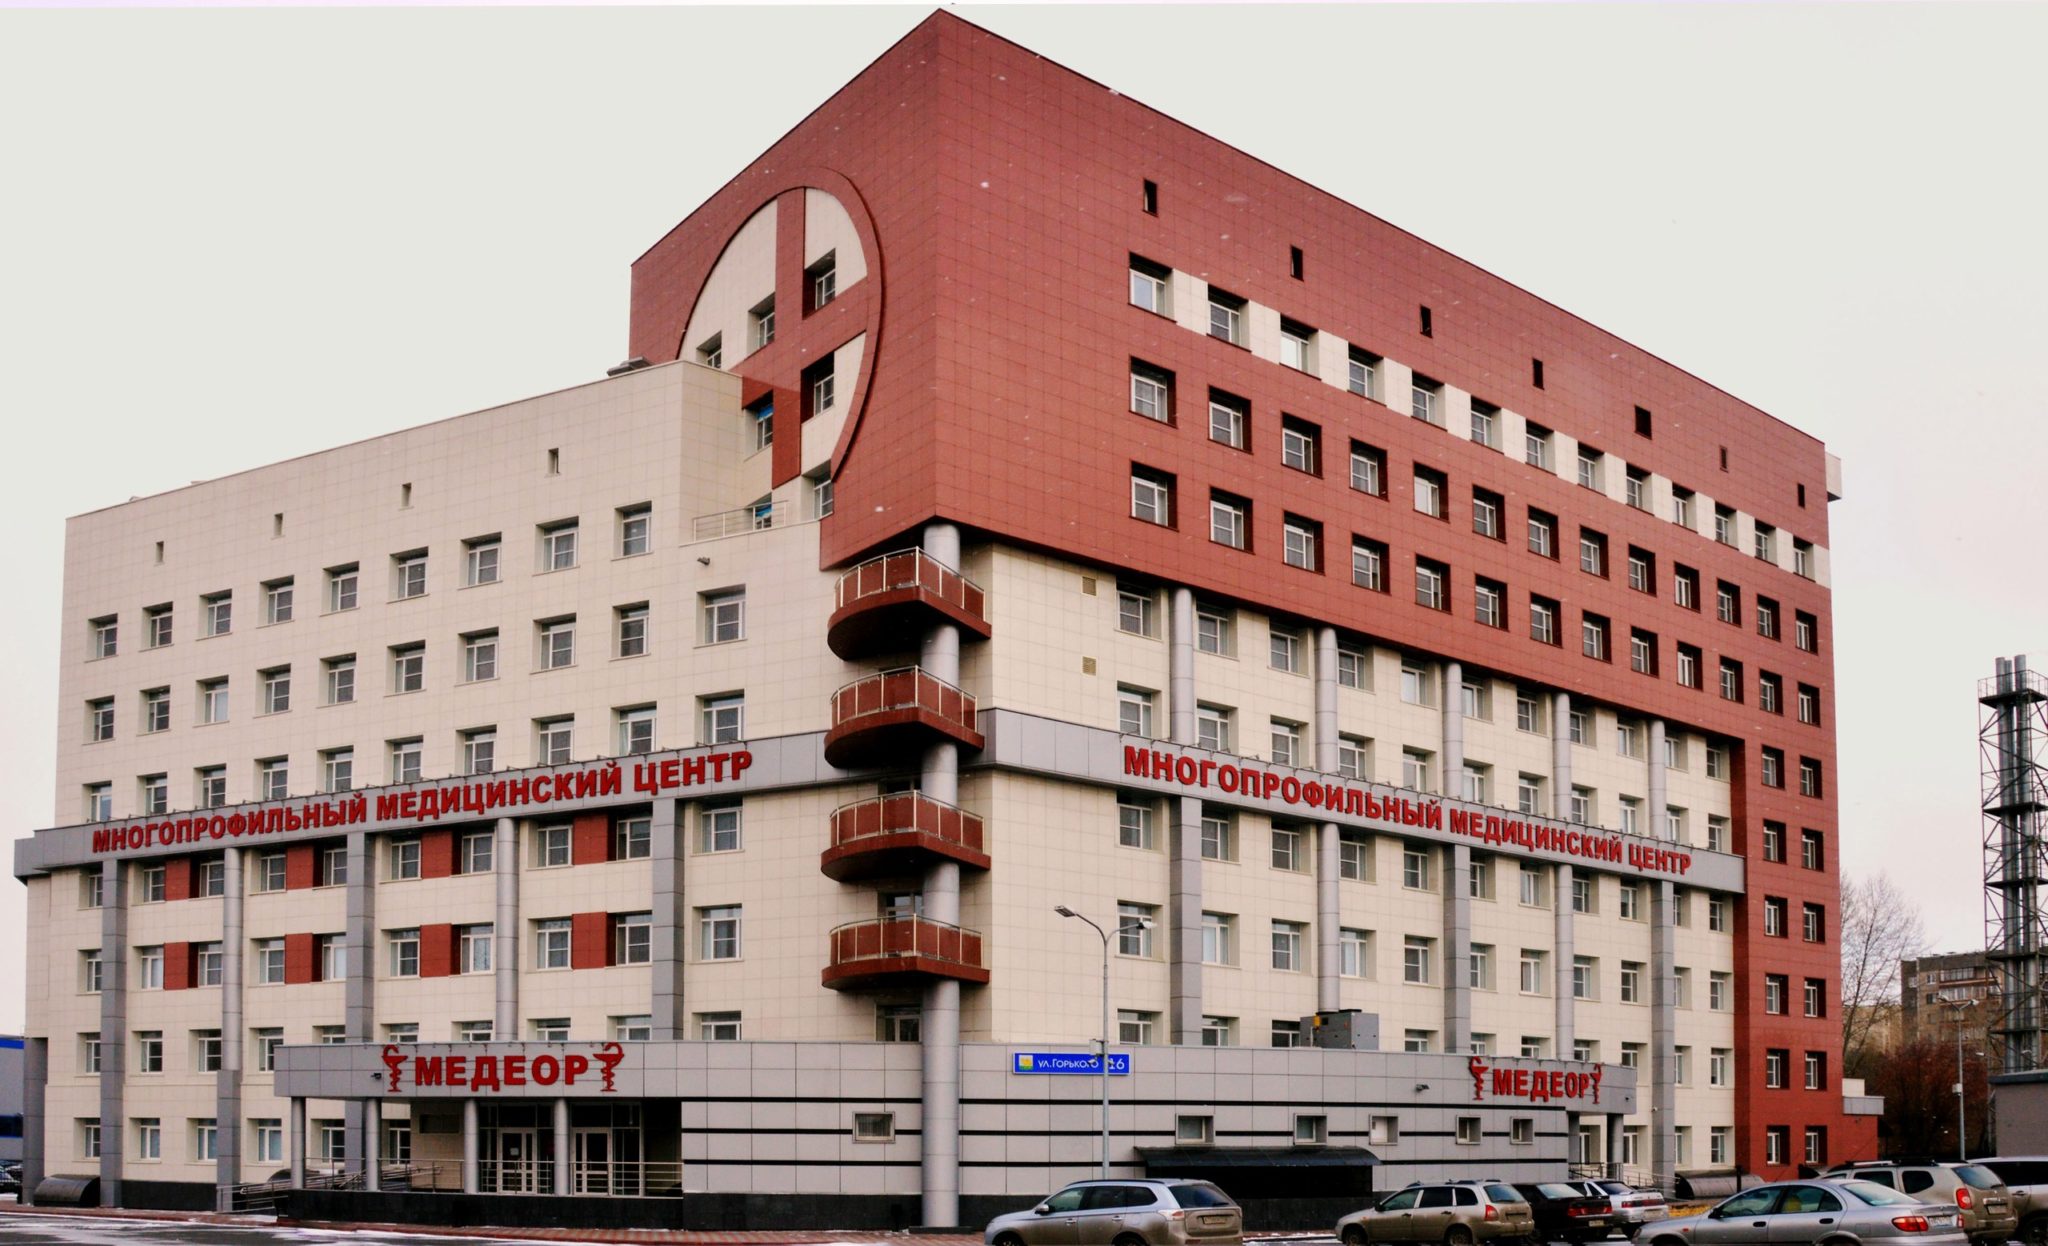 Медицинский центр "МЕДЕОР"